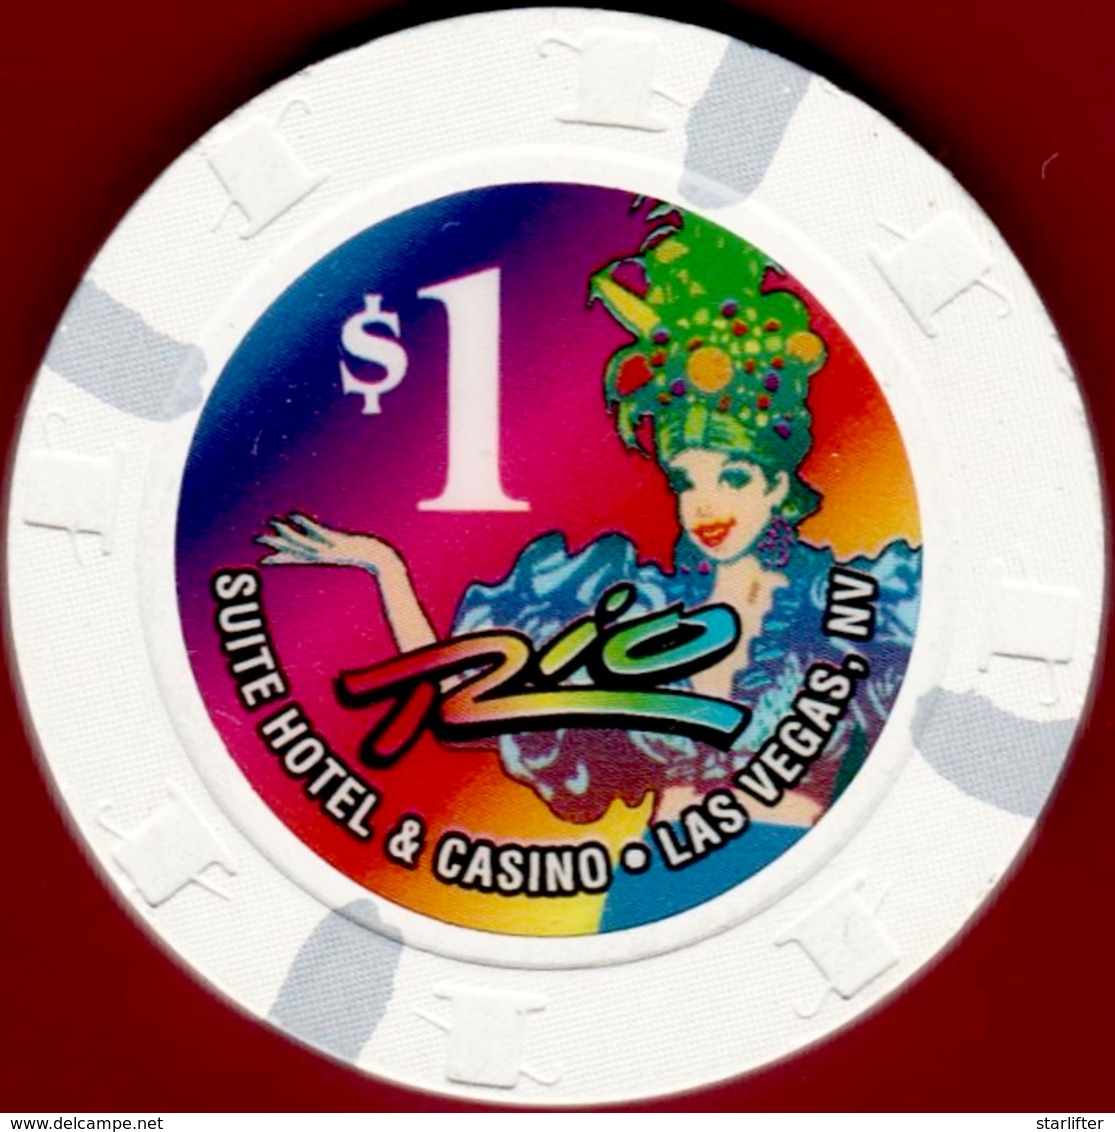 $1 Casino Chip. Rio, Las Vegas, NV. I09. - Casino